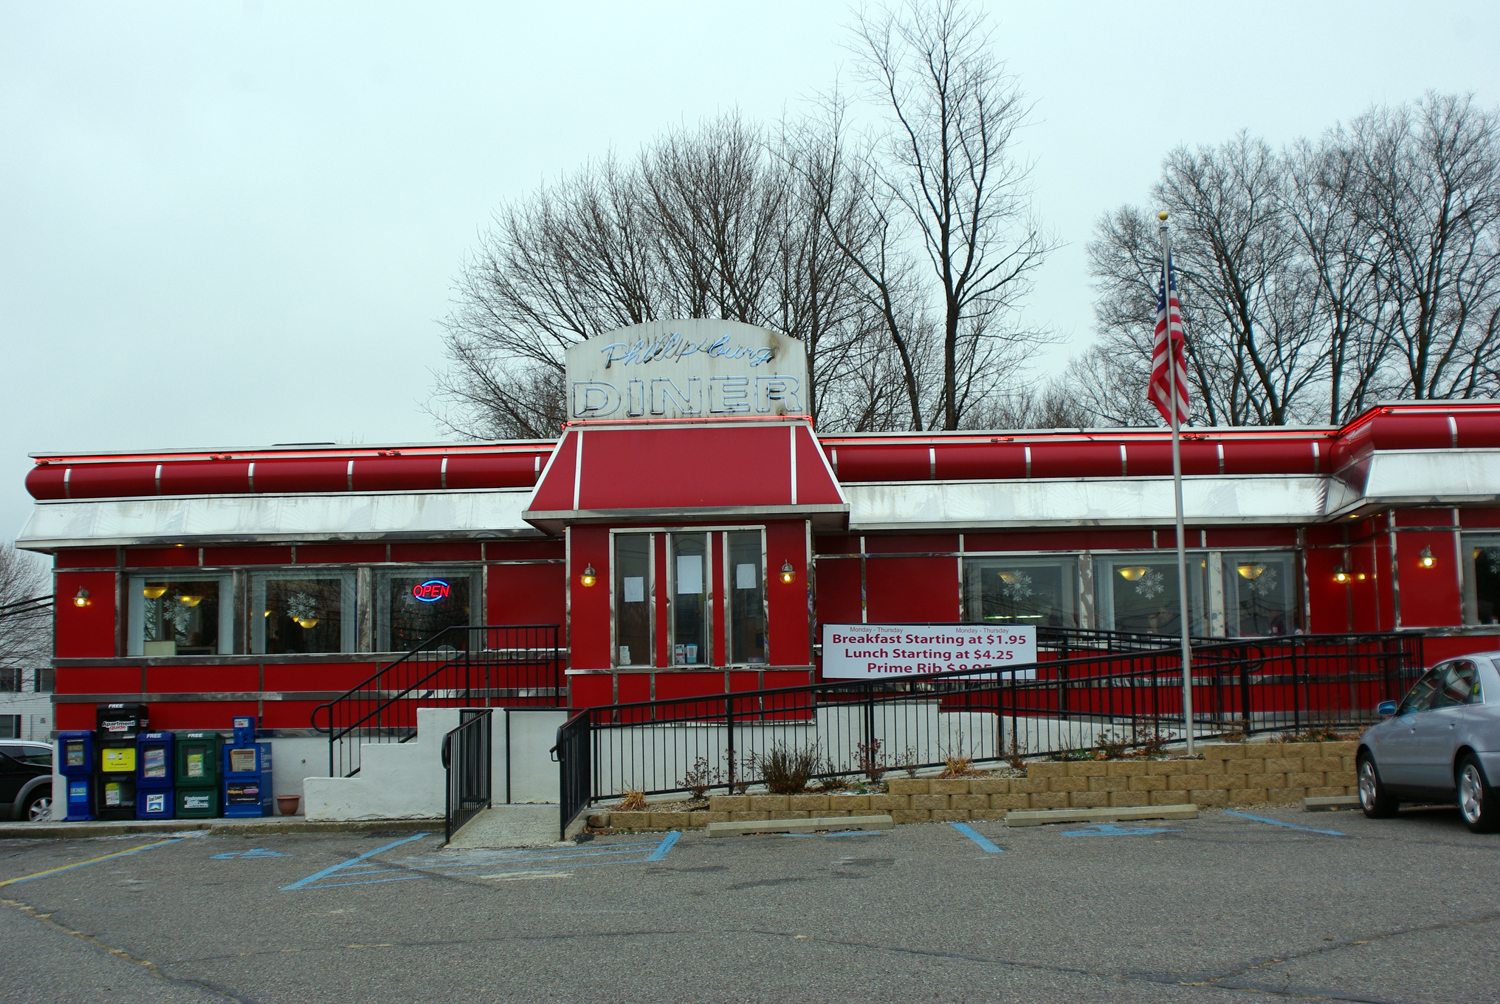 The Phillipsburg Diner